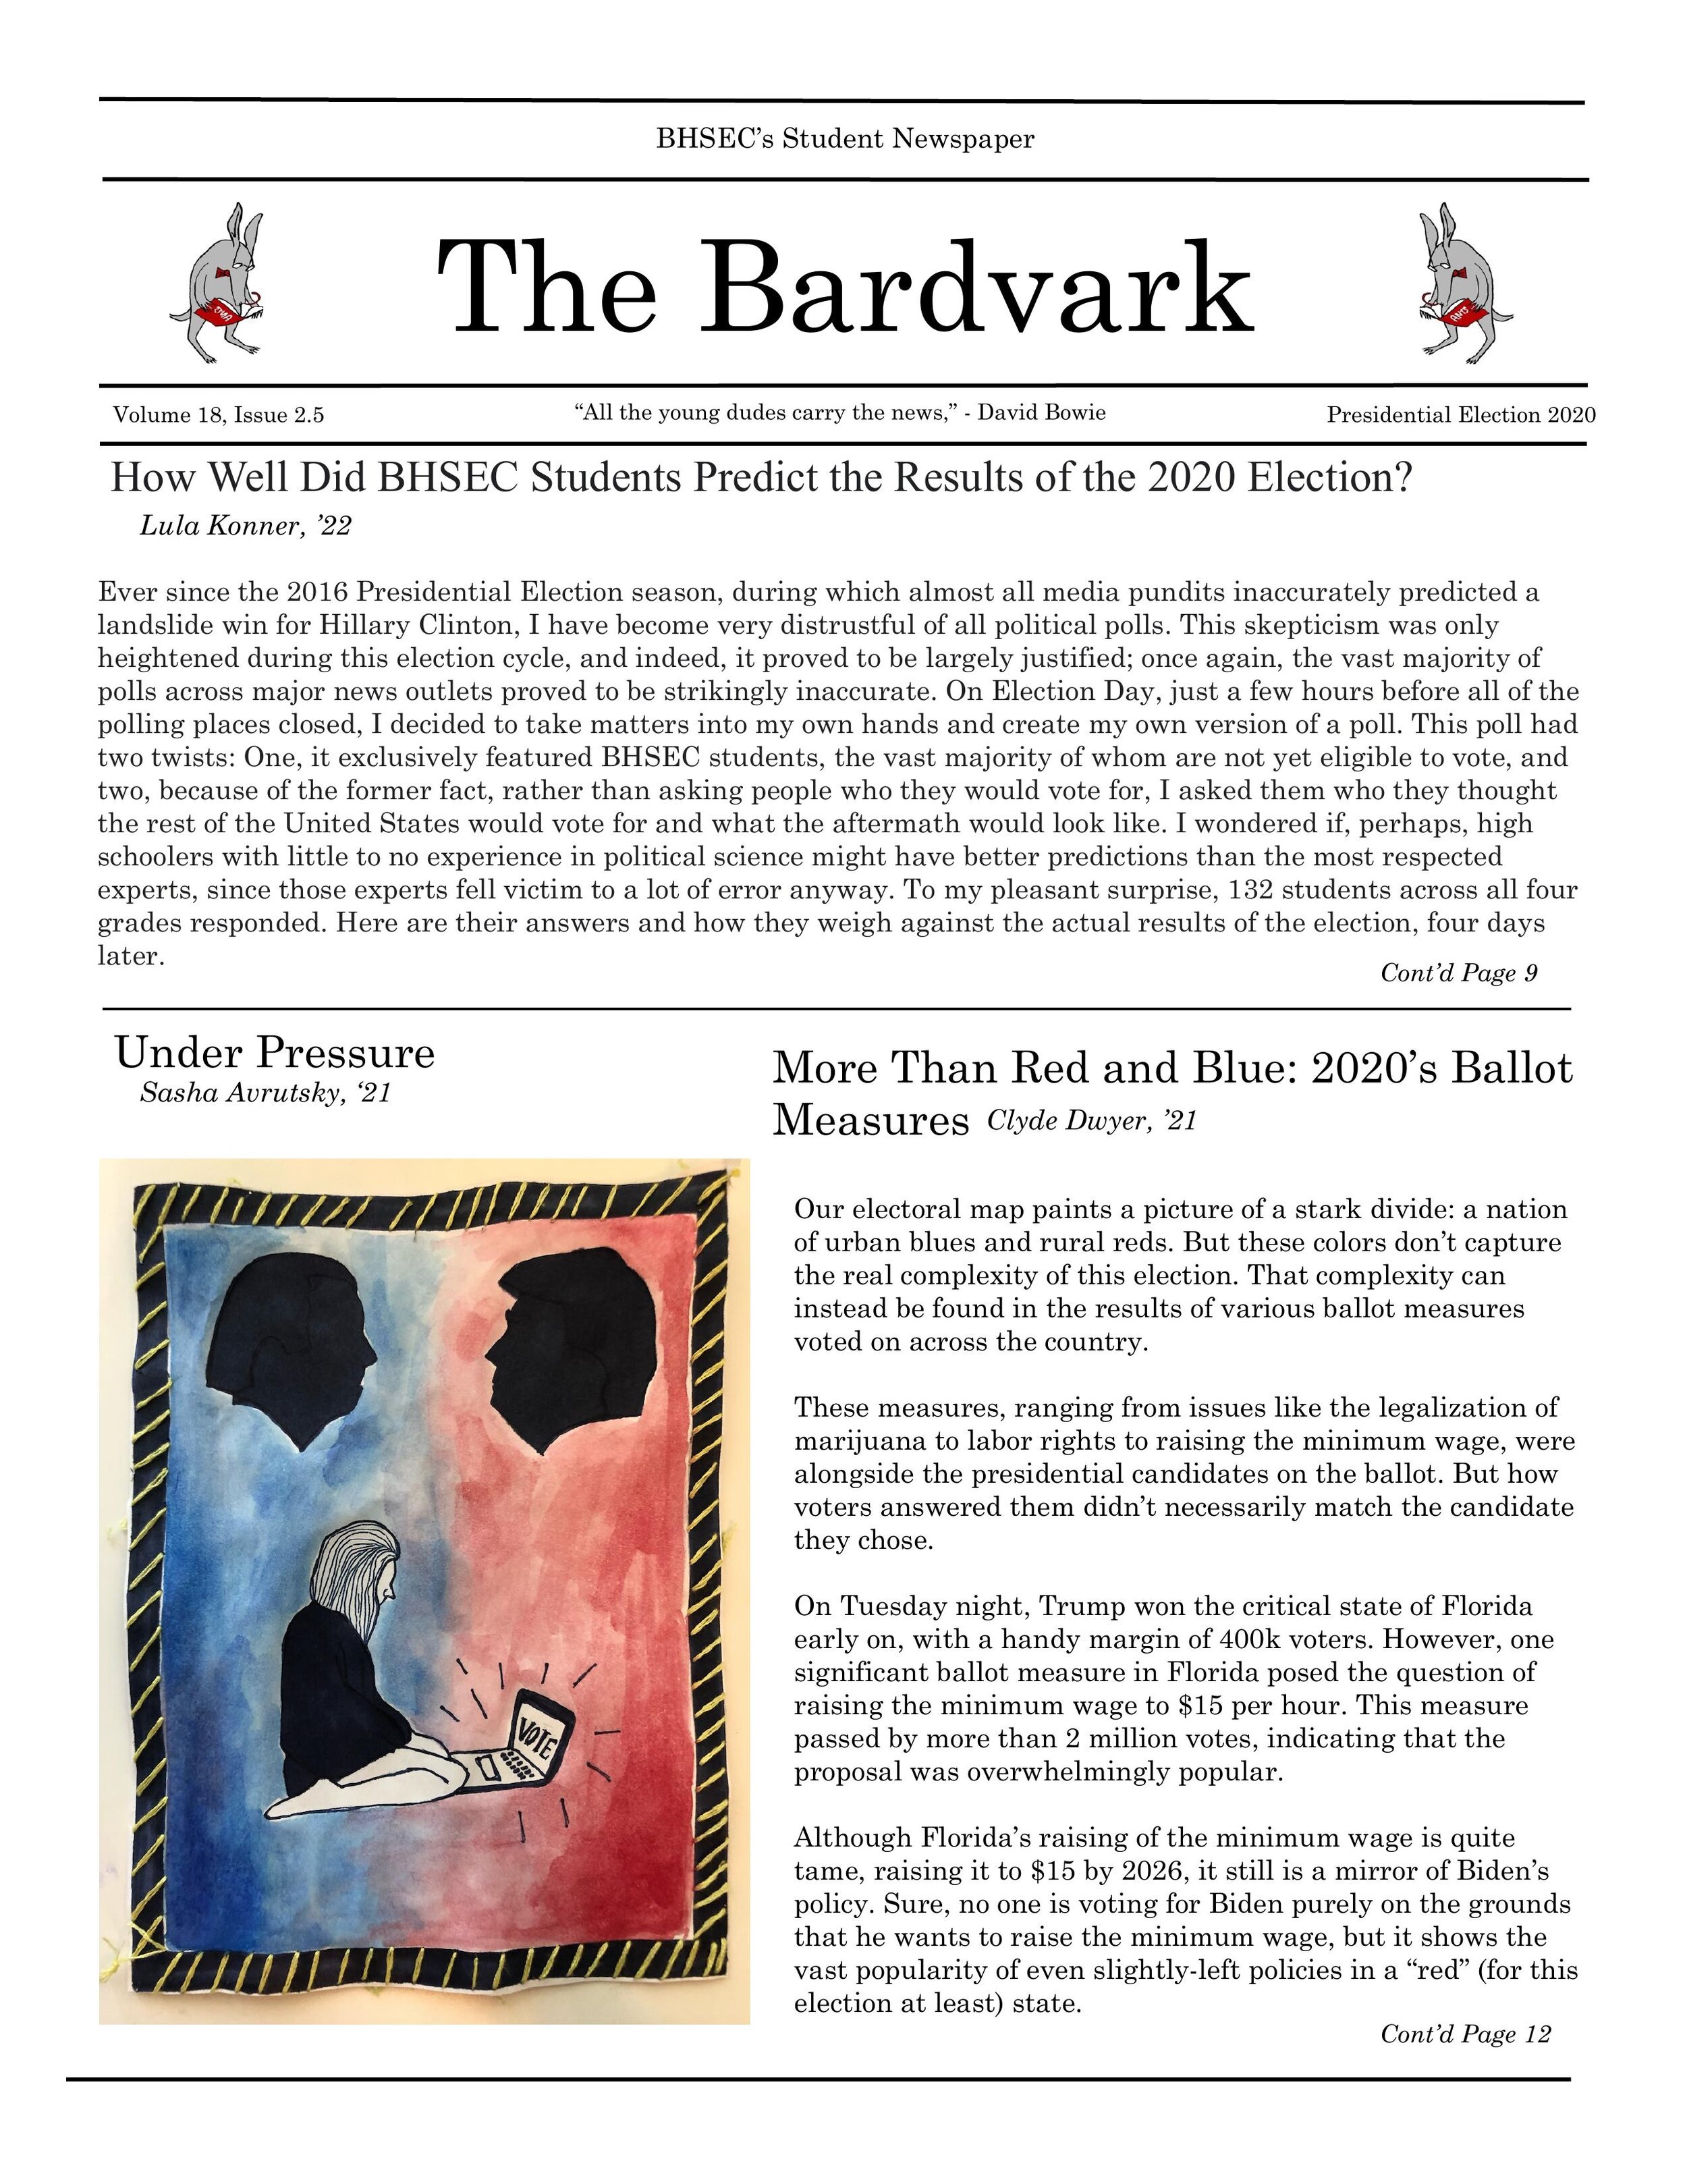 Bardvark Vol 18.2.5-1.jpg